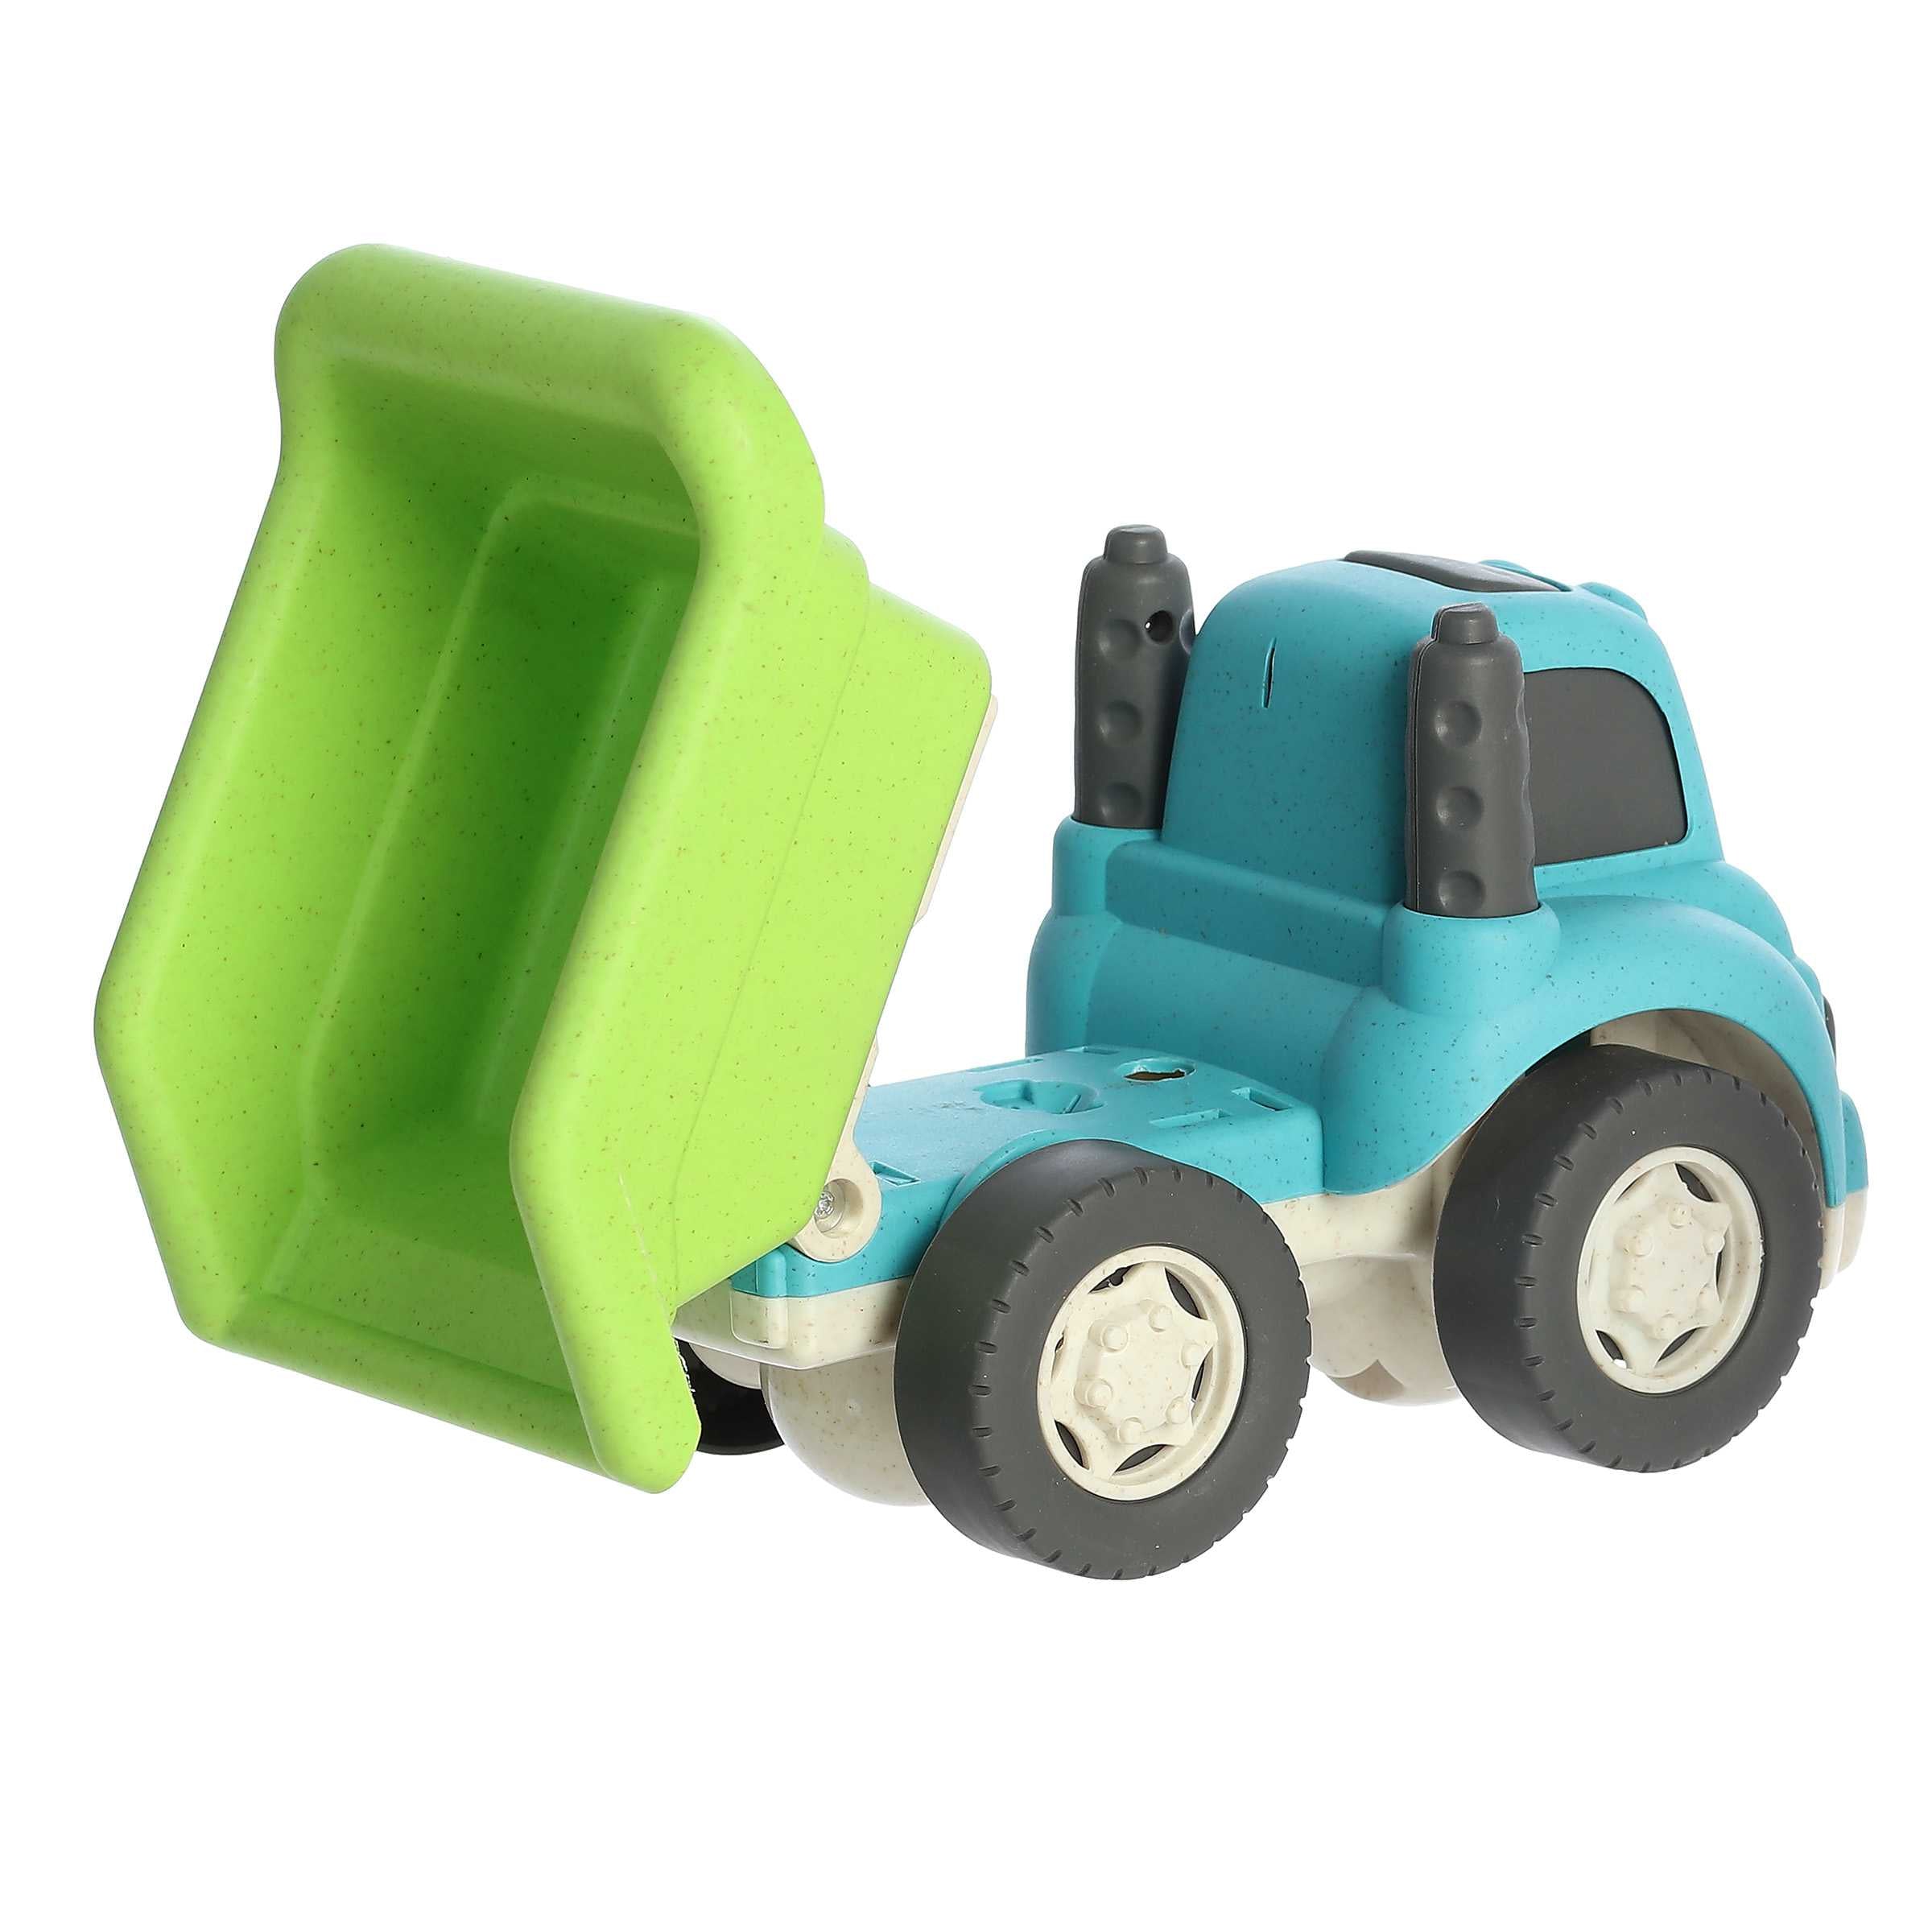 Aurora® Toys - Wheatley™ - Dump Truck